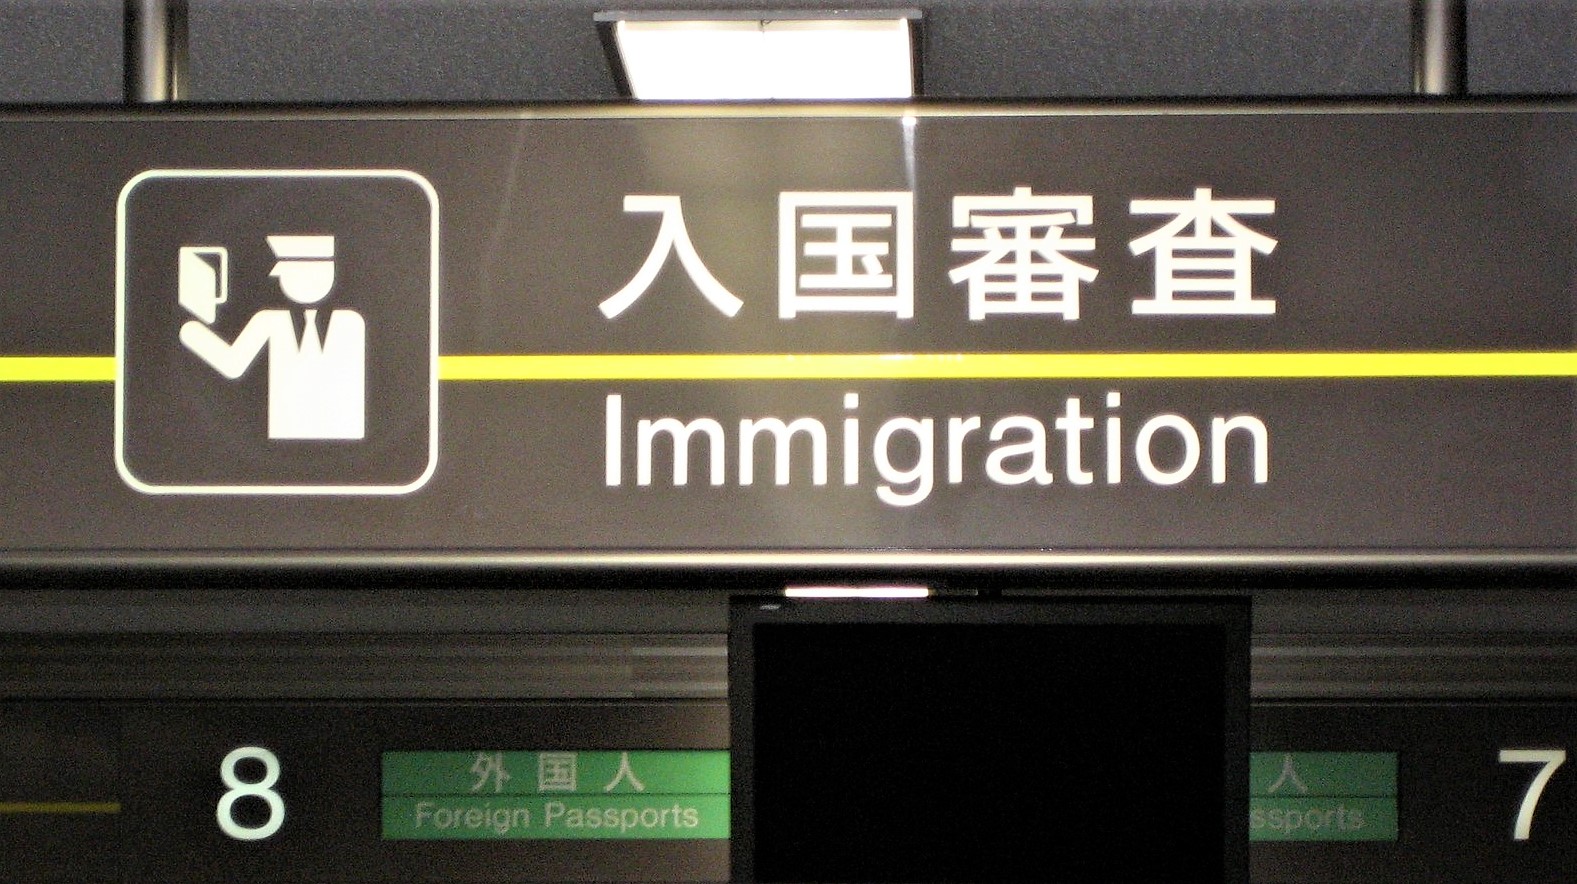 Immigration Sign. Credits to: BriansBlog (CC BY-SA 2.0)